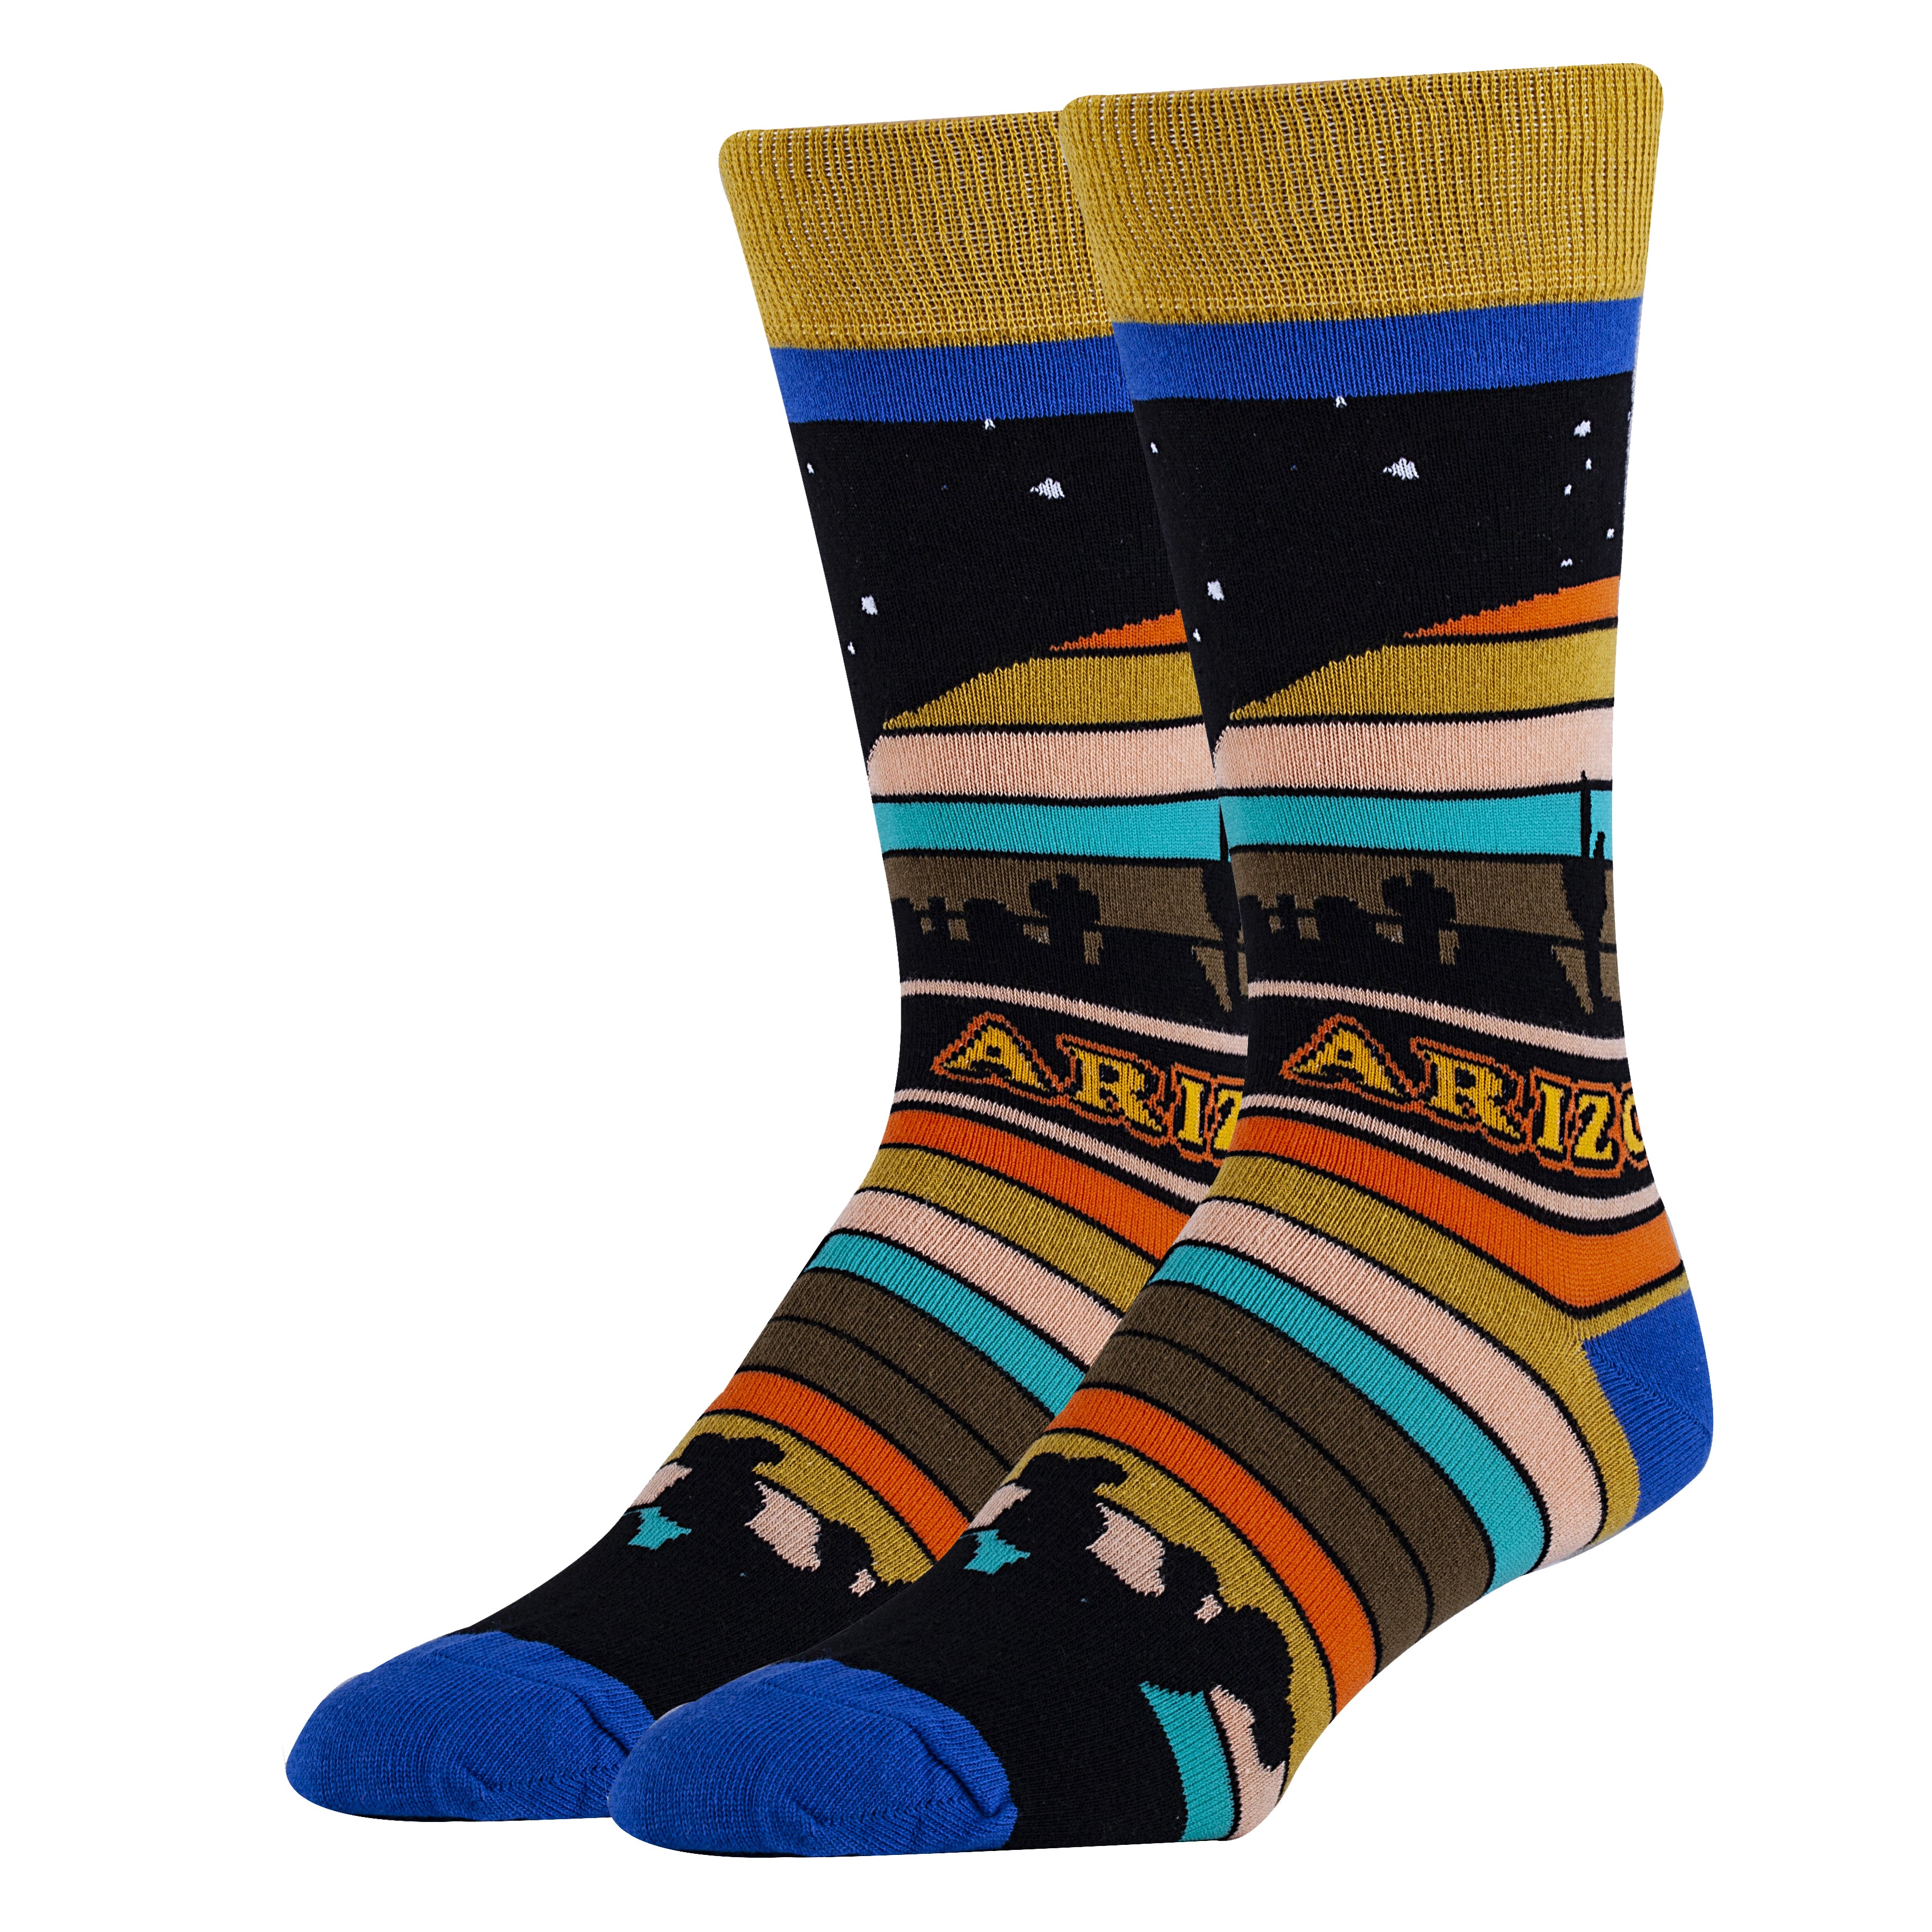 Arizona Socks | Socks Yeah! For Socks Novelty Crew | Men Oooh